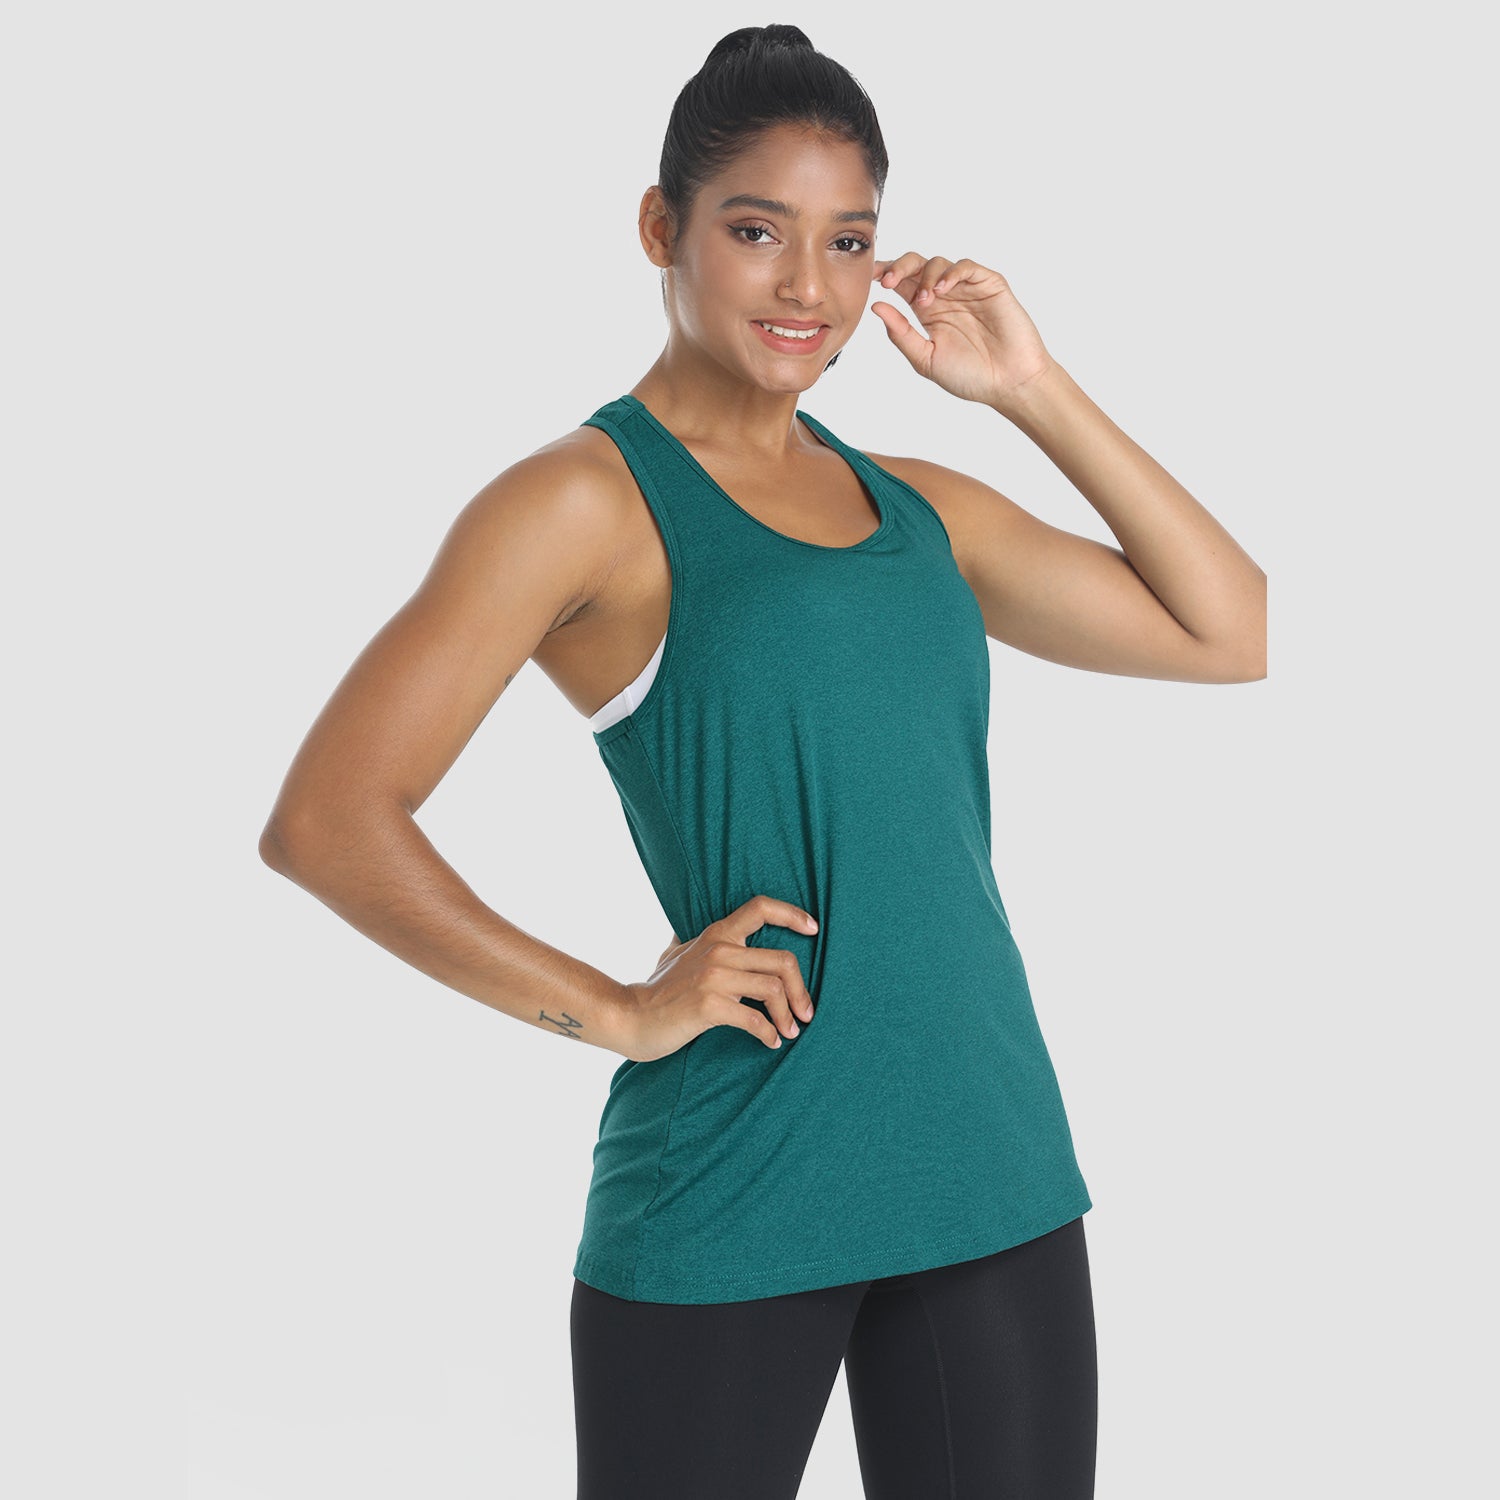 Women's Tank Top Quick Dry Athletic Tee Shirt Running Yoga